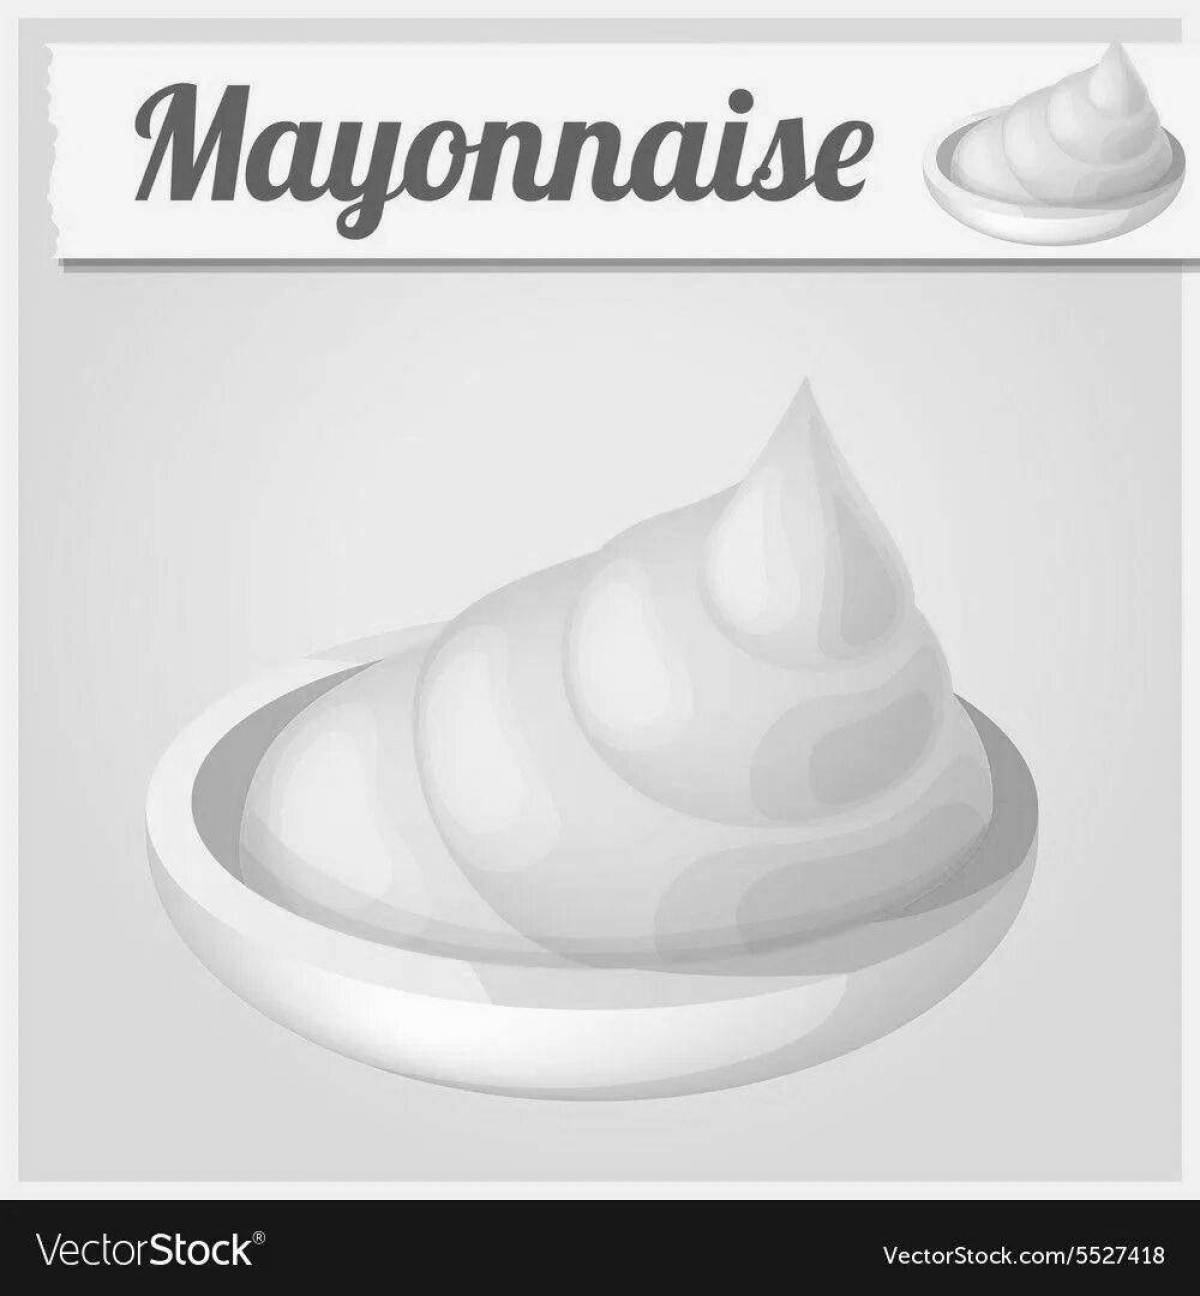 Mayonnaise coloring page